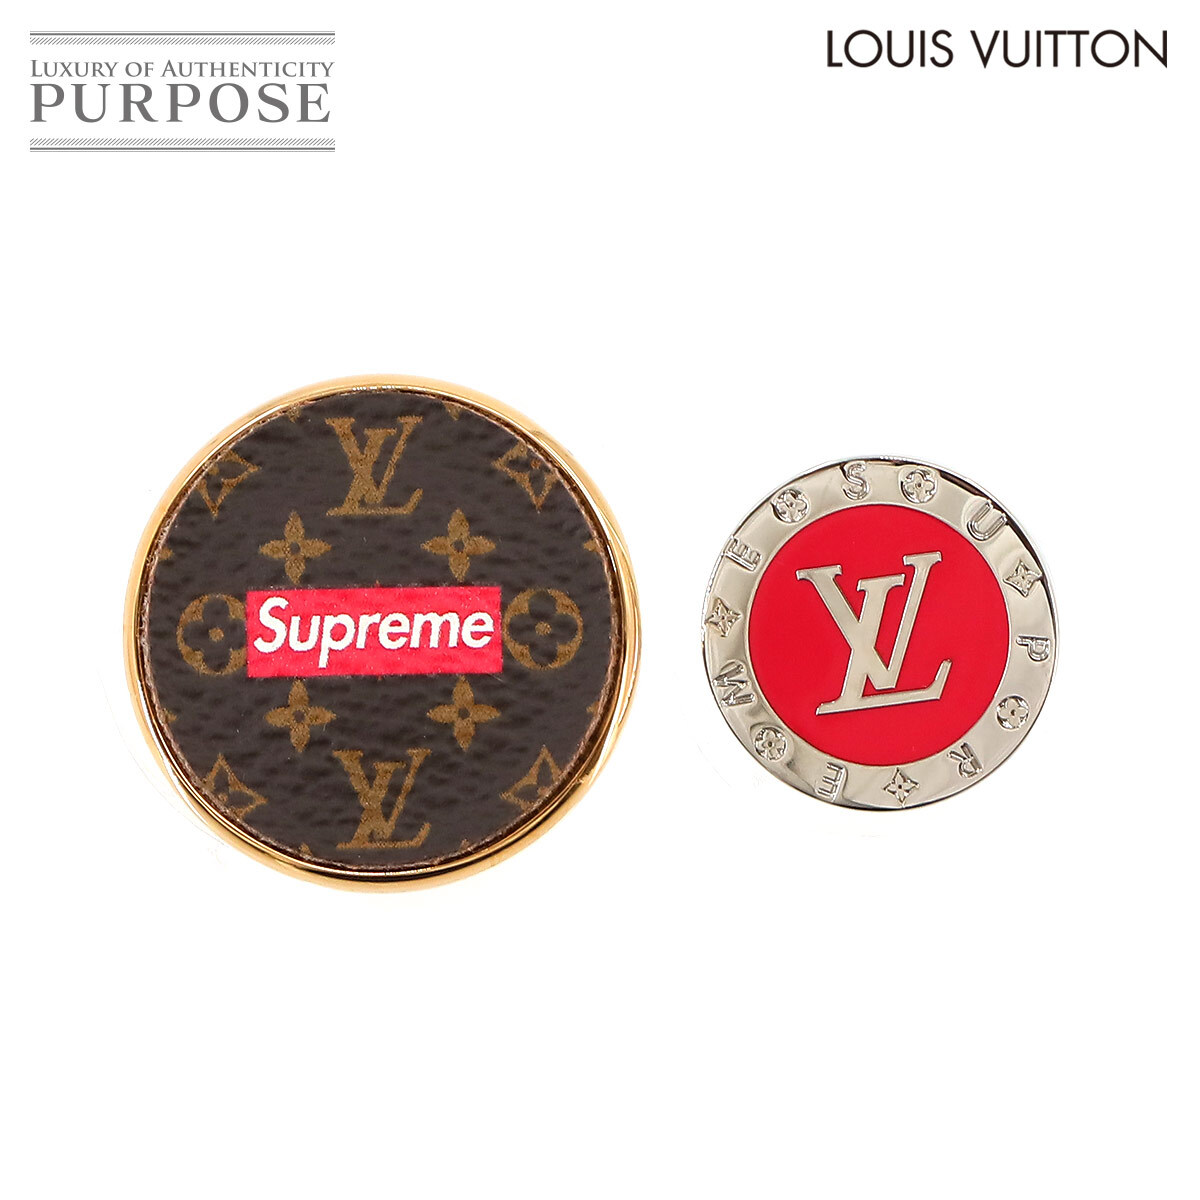  unused exhibition goods Louis Vuitton LOUIS VUITTON Supreme monogram pin brooch 2 point set Brown red MP2076 Lapel Pin 90232069